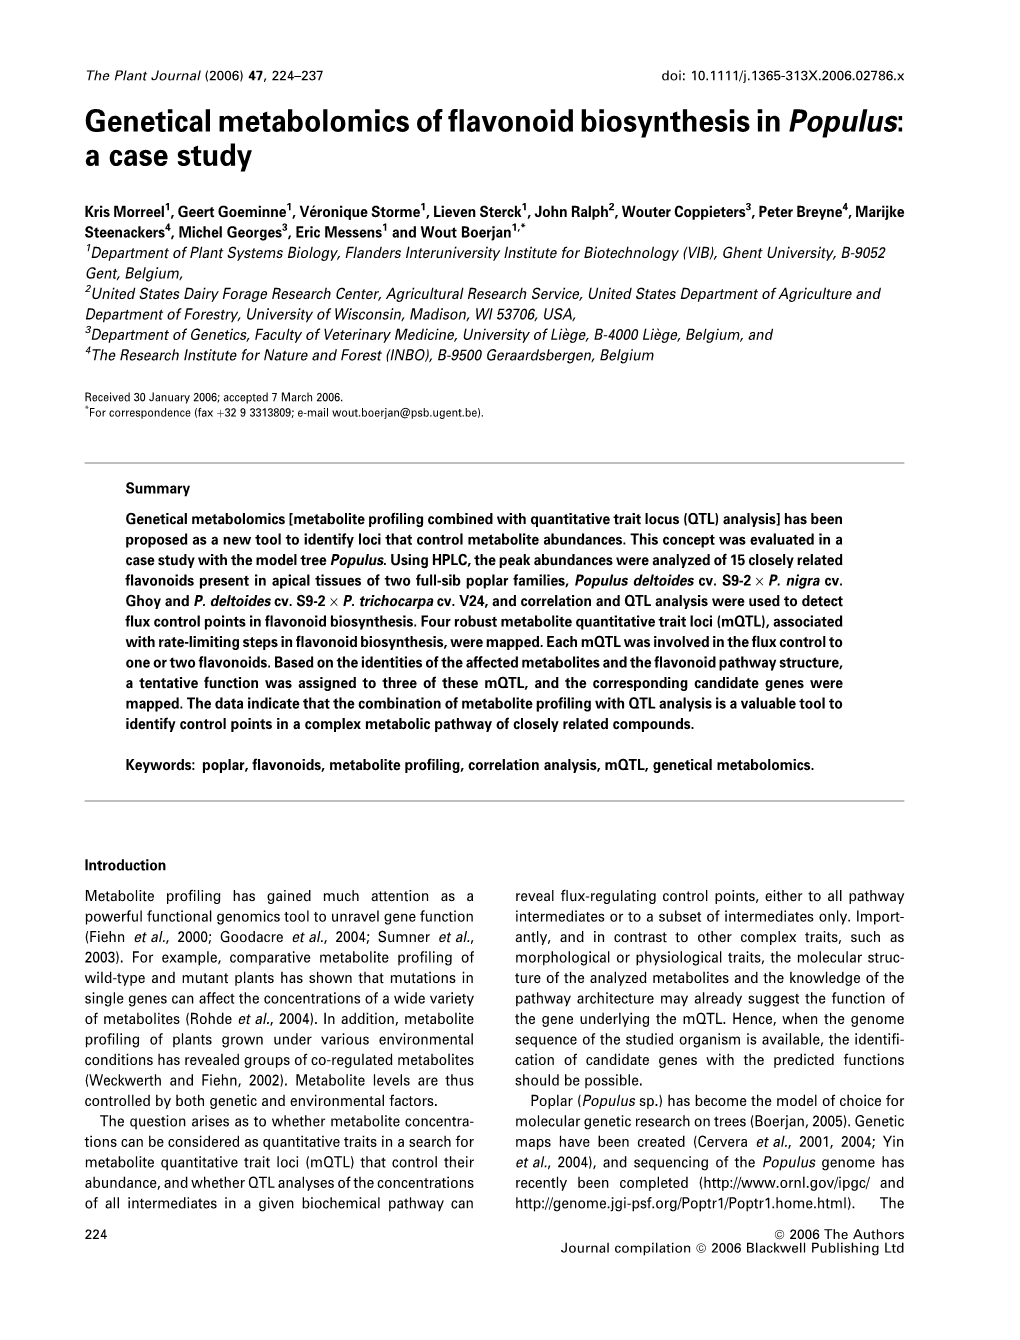 Genetical Metabolomics of Flavonoid Biosynthesis in Populus